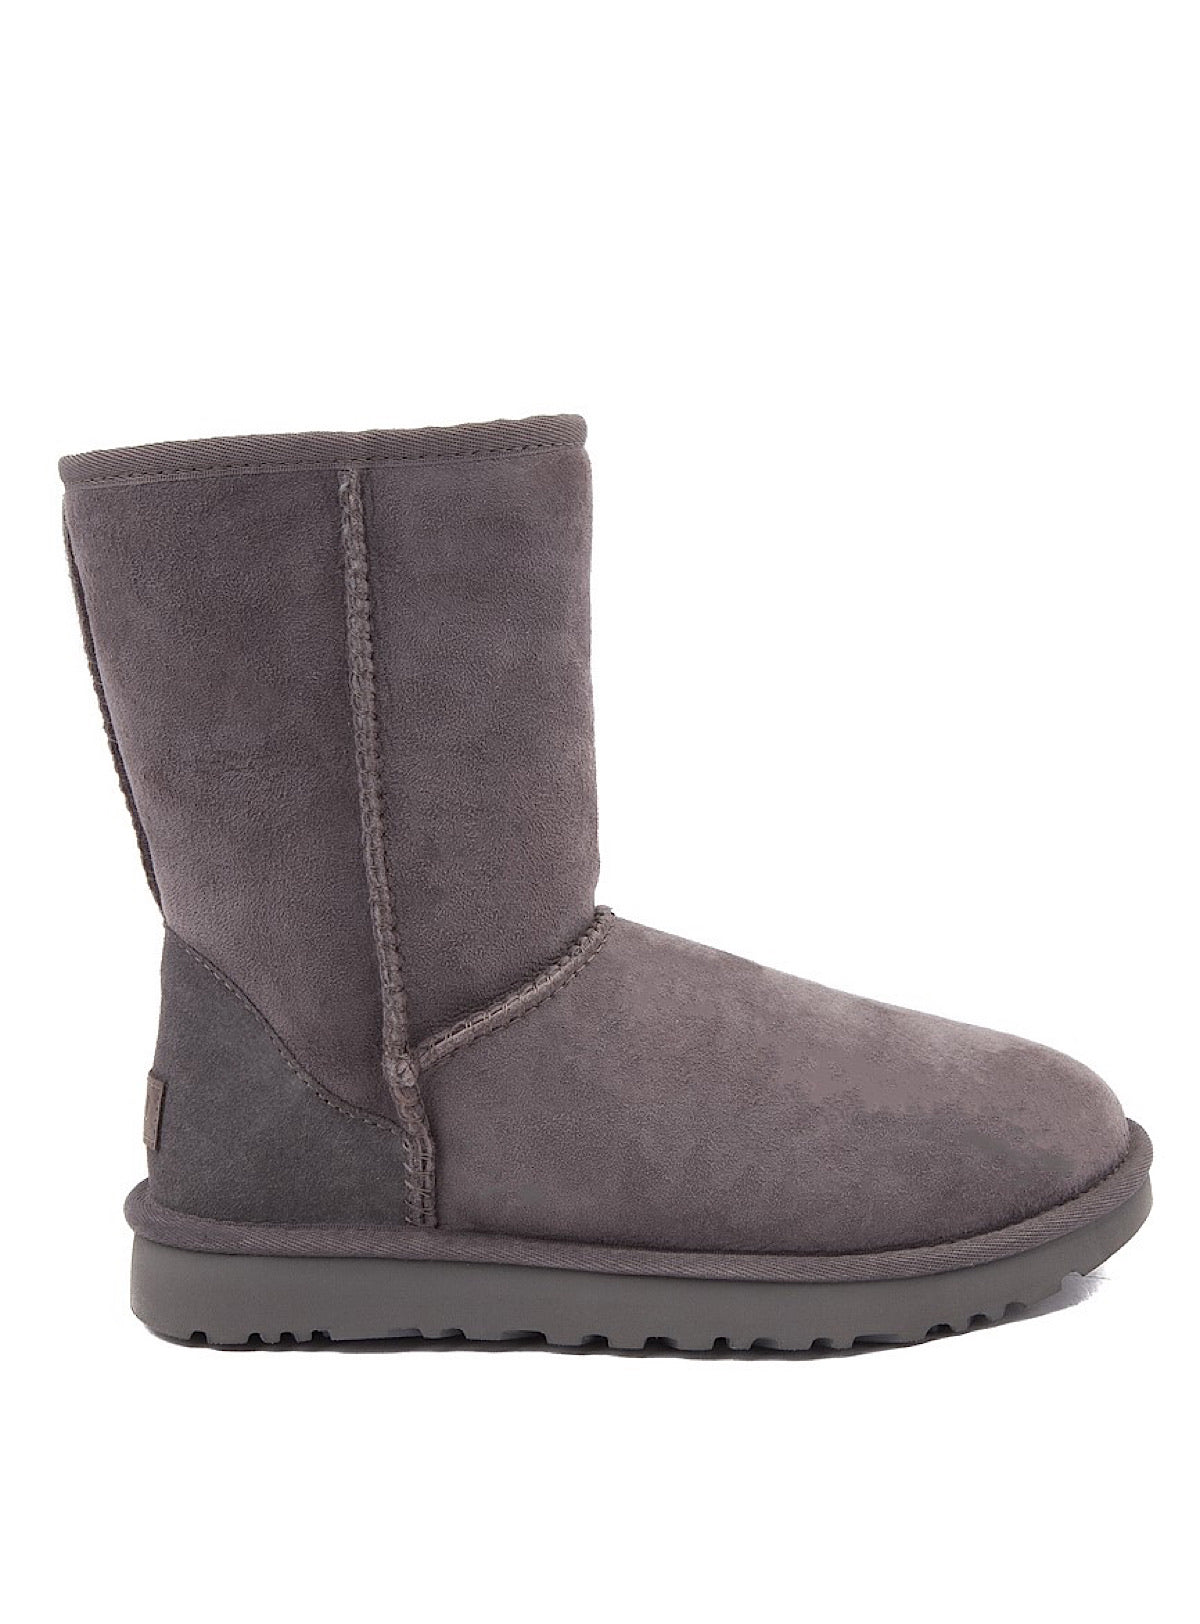 grey classic short ugg boots